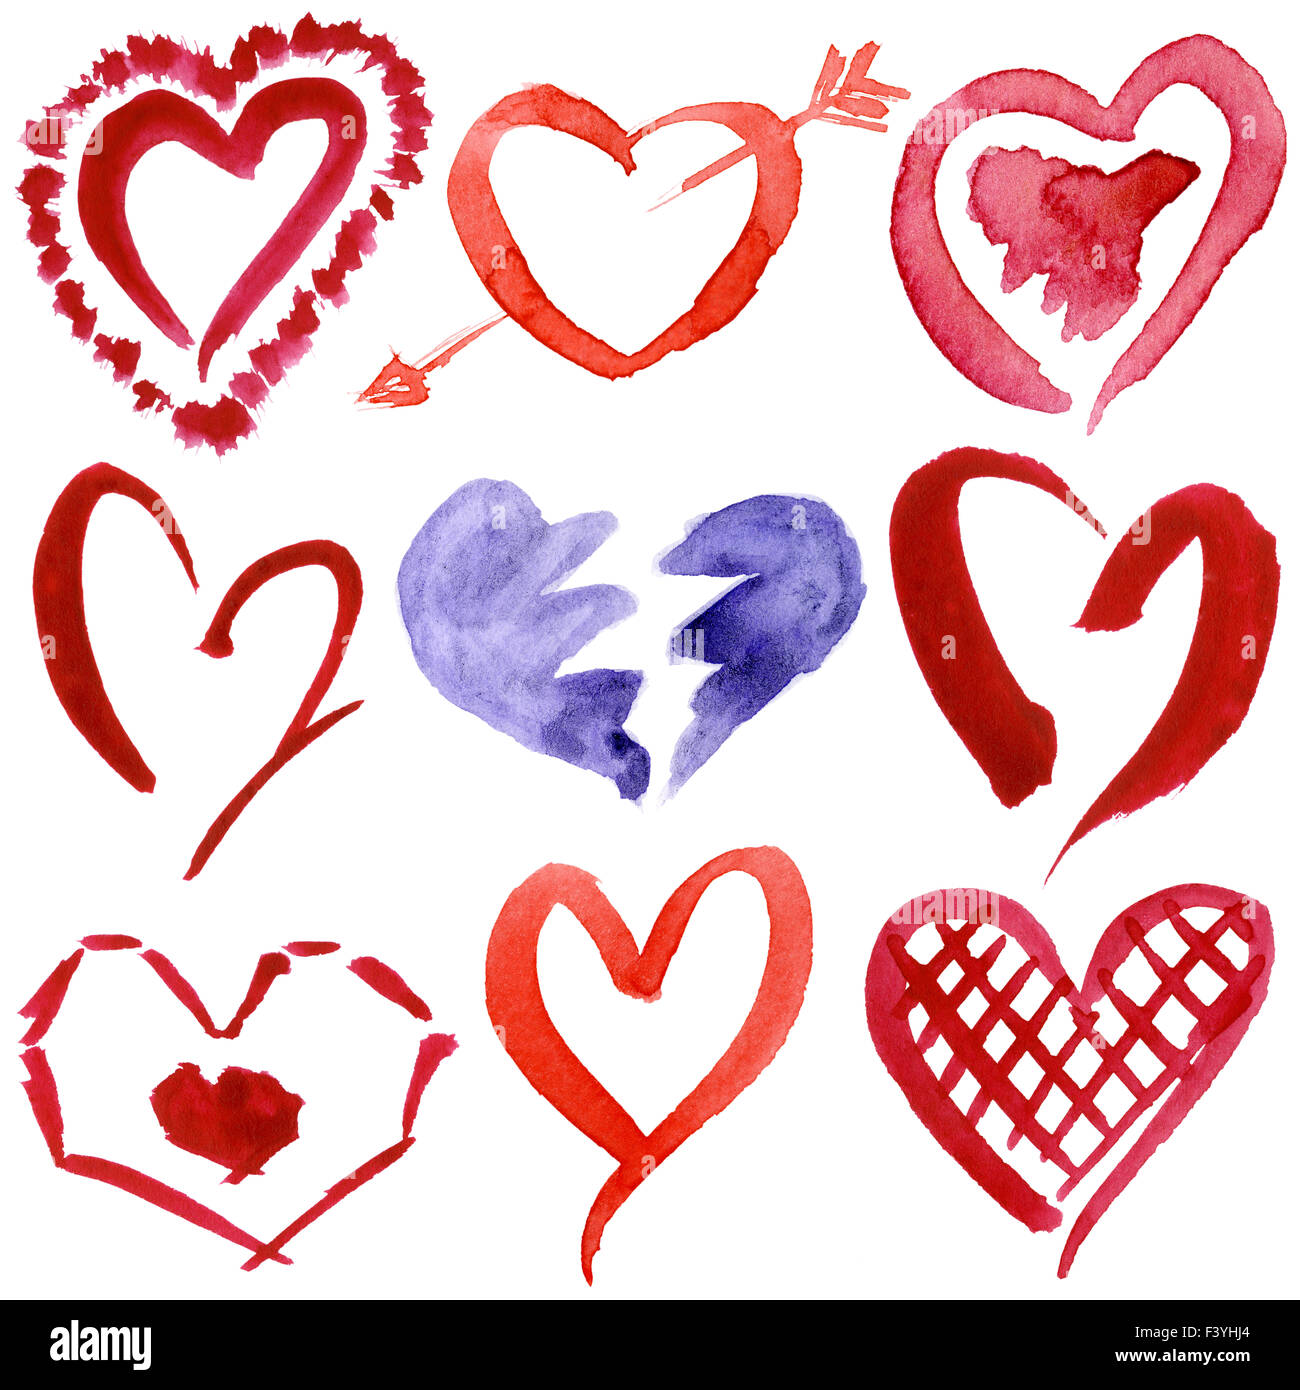 Abstract hand drawn watercolor hearts set Stock Photo